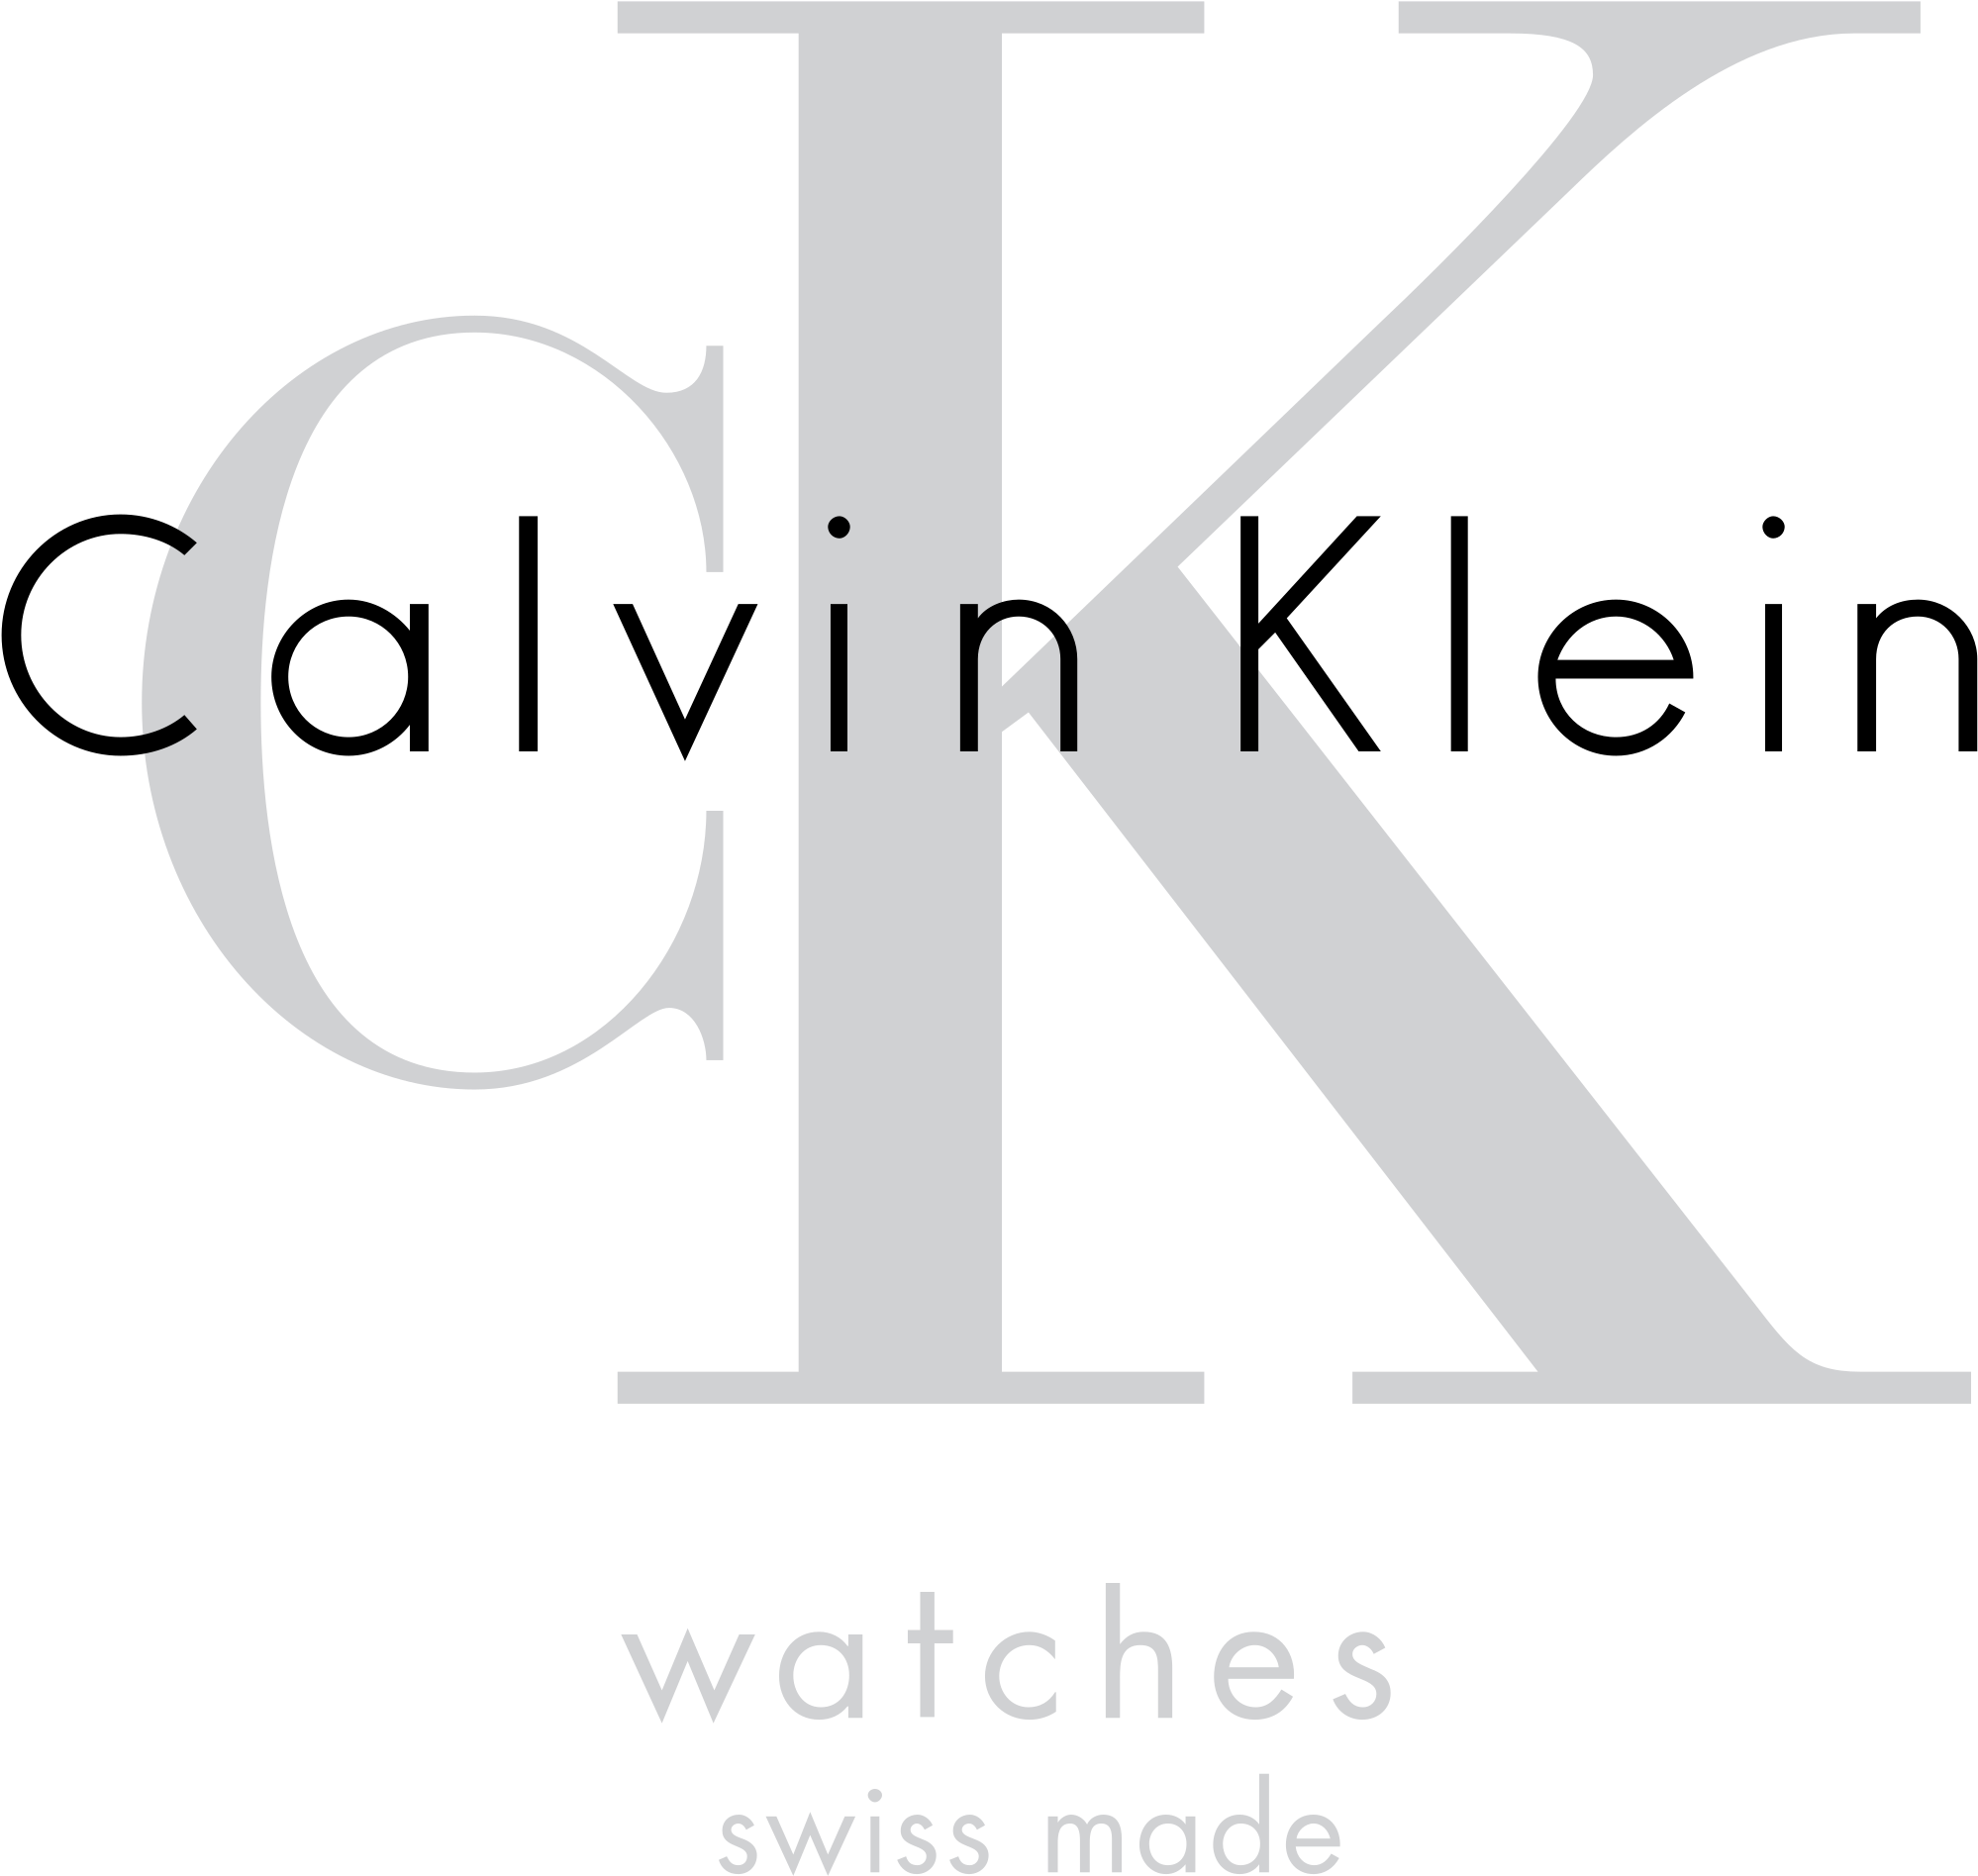 Ck calvin klein logo immagine Trasparente